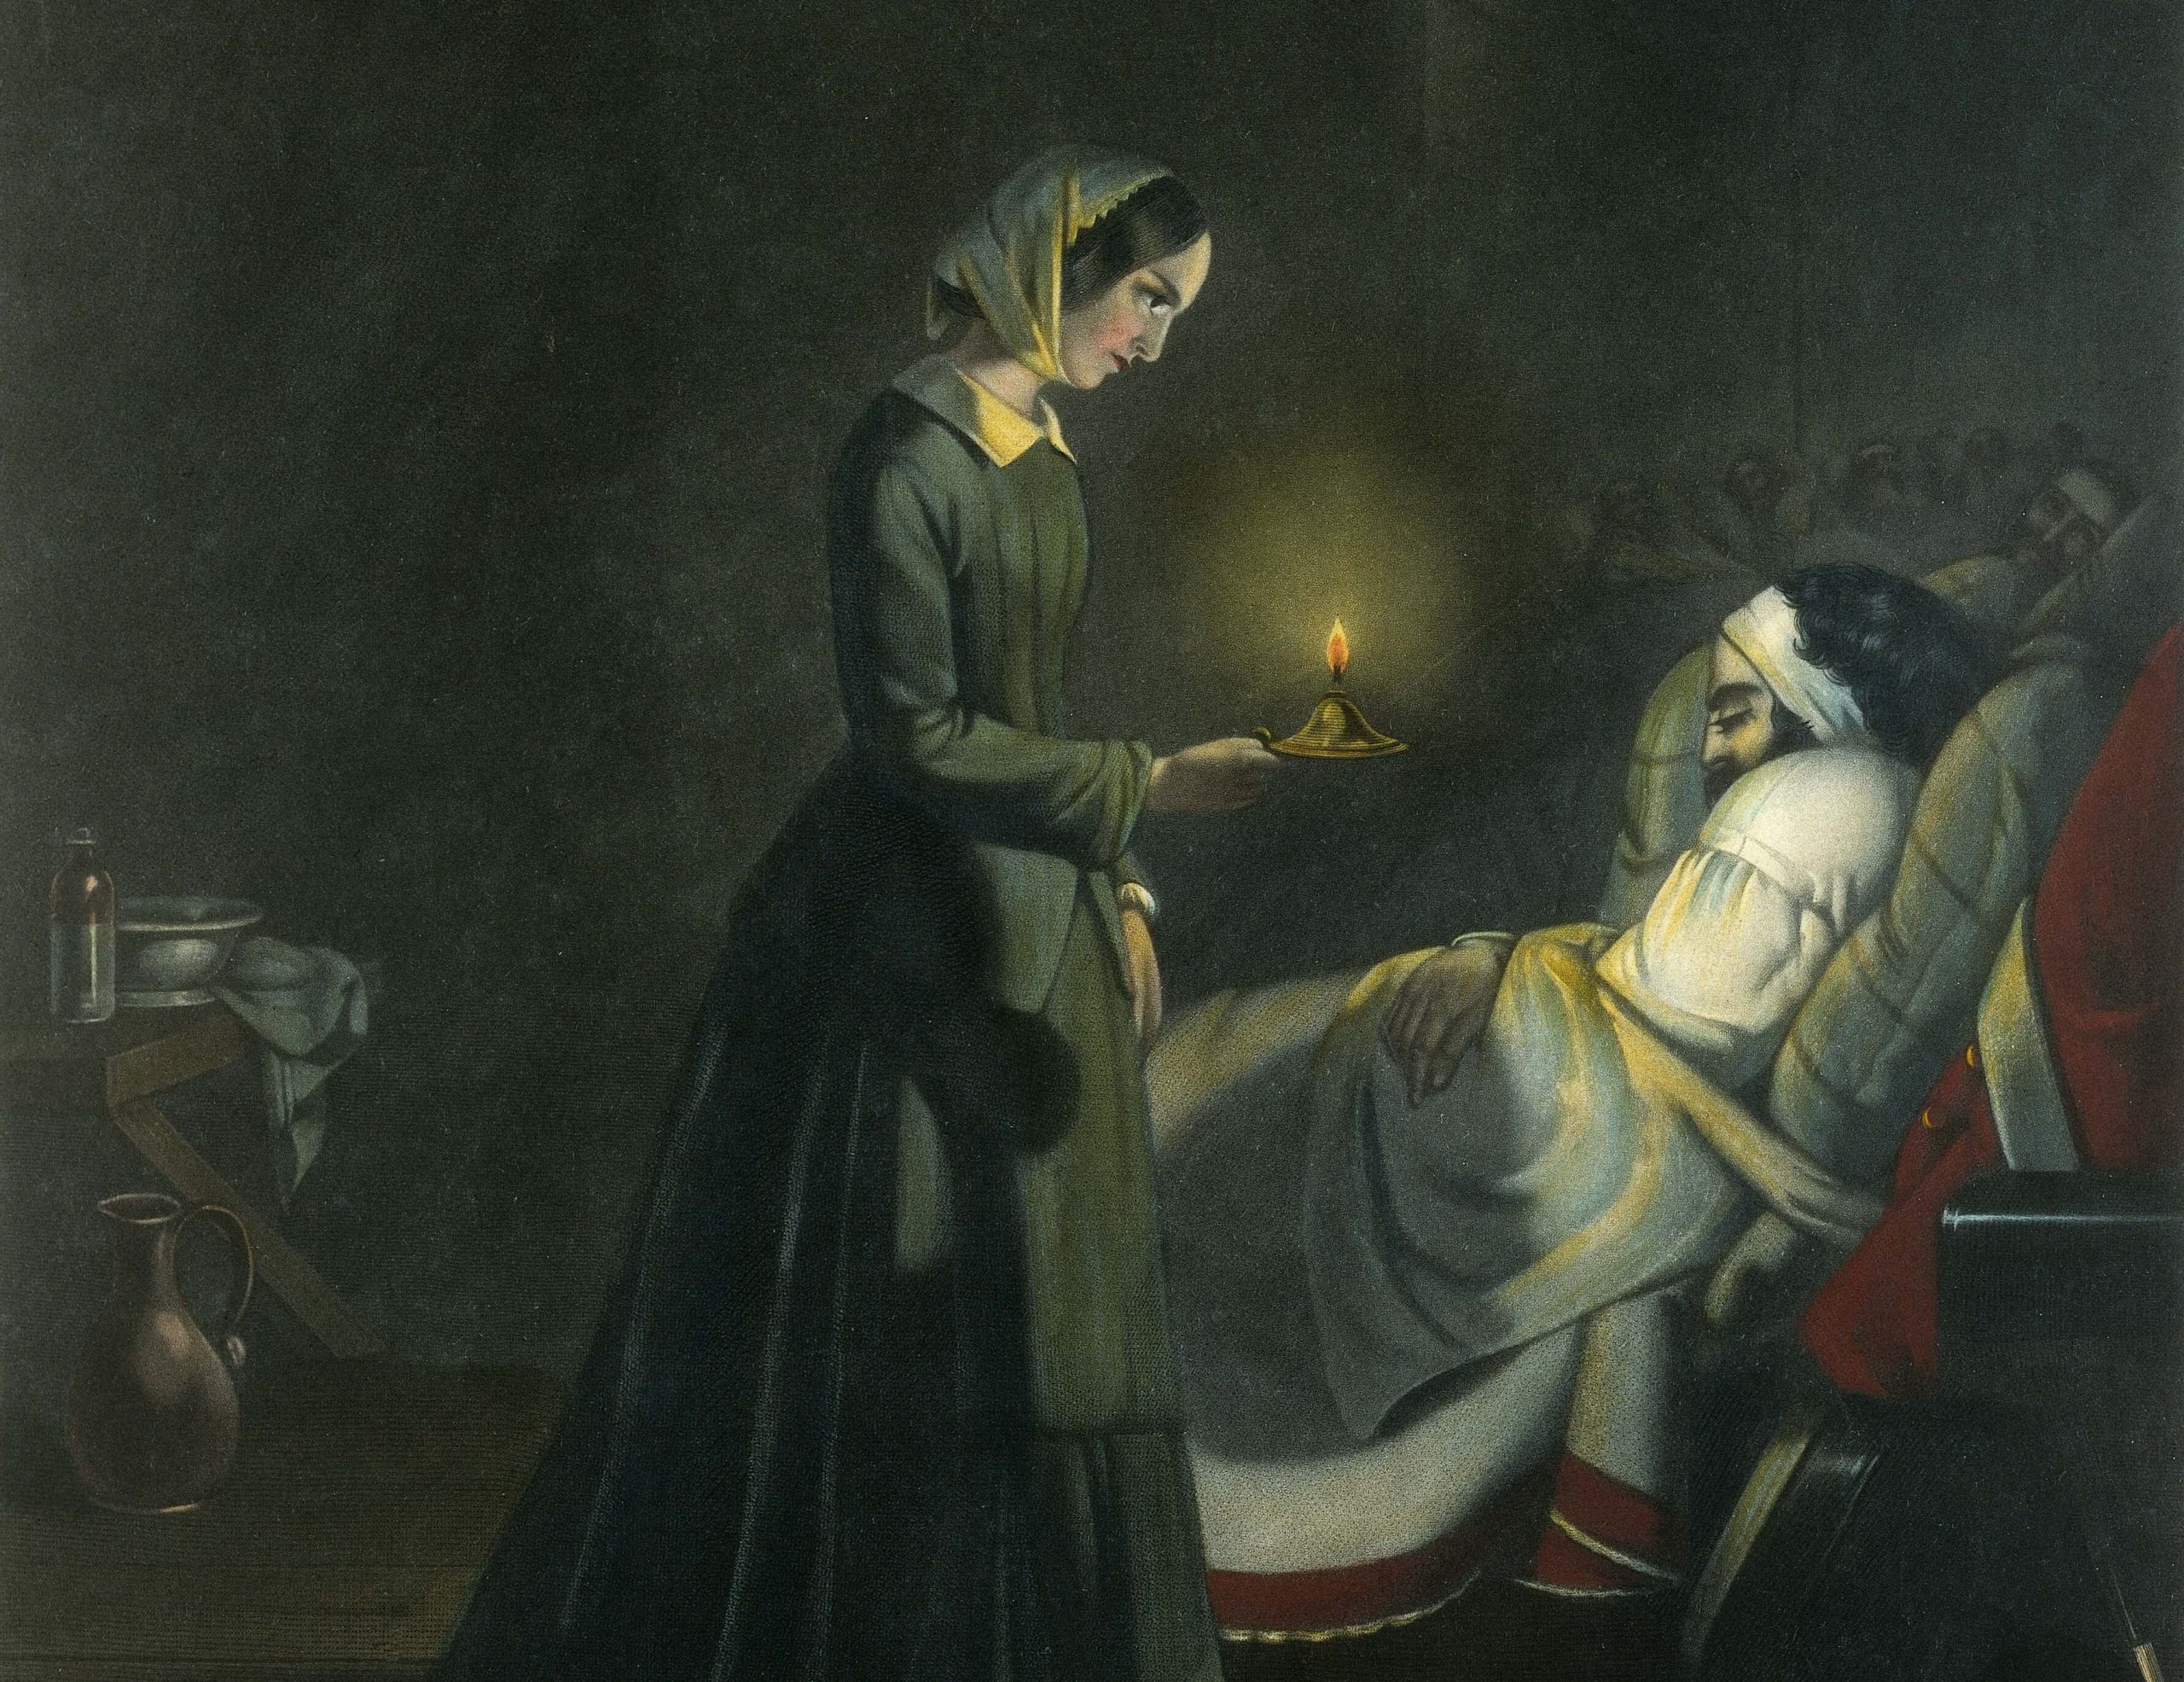 Nightingale2020 Remembering Nursing Pioneer Florence Nightingale 200 Years After Her Birth Europeana